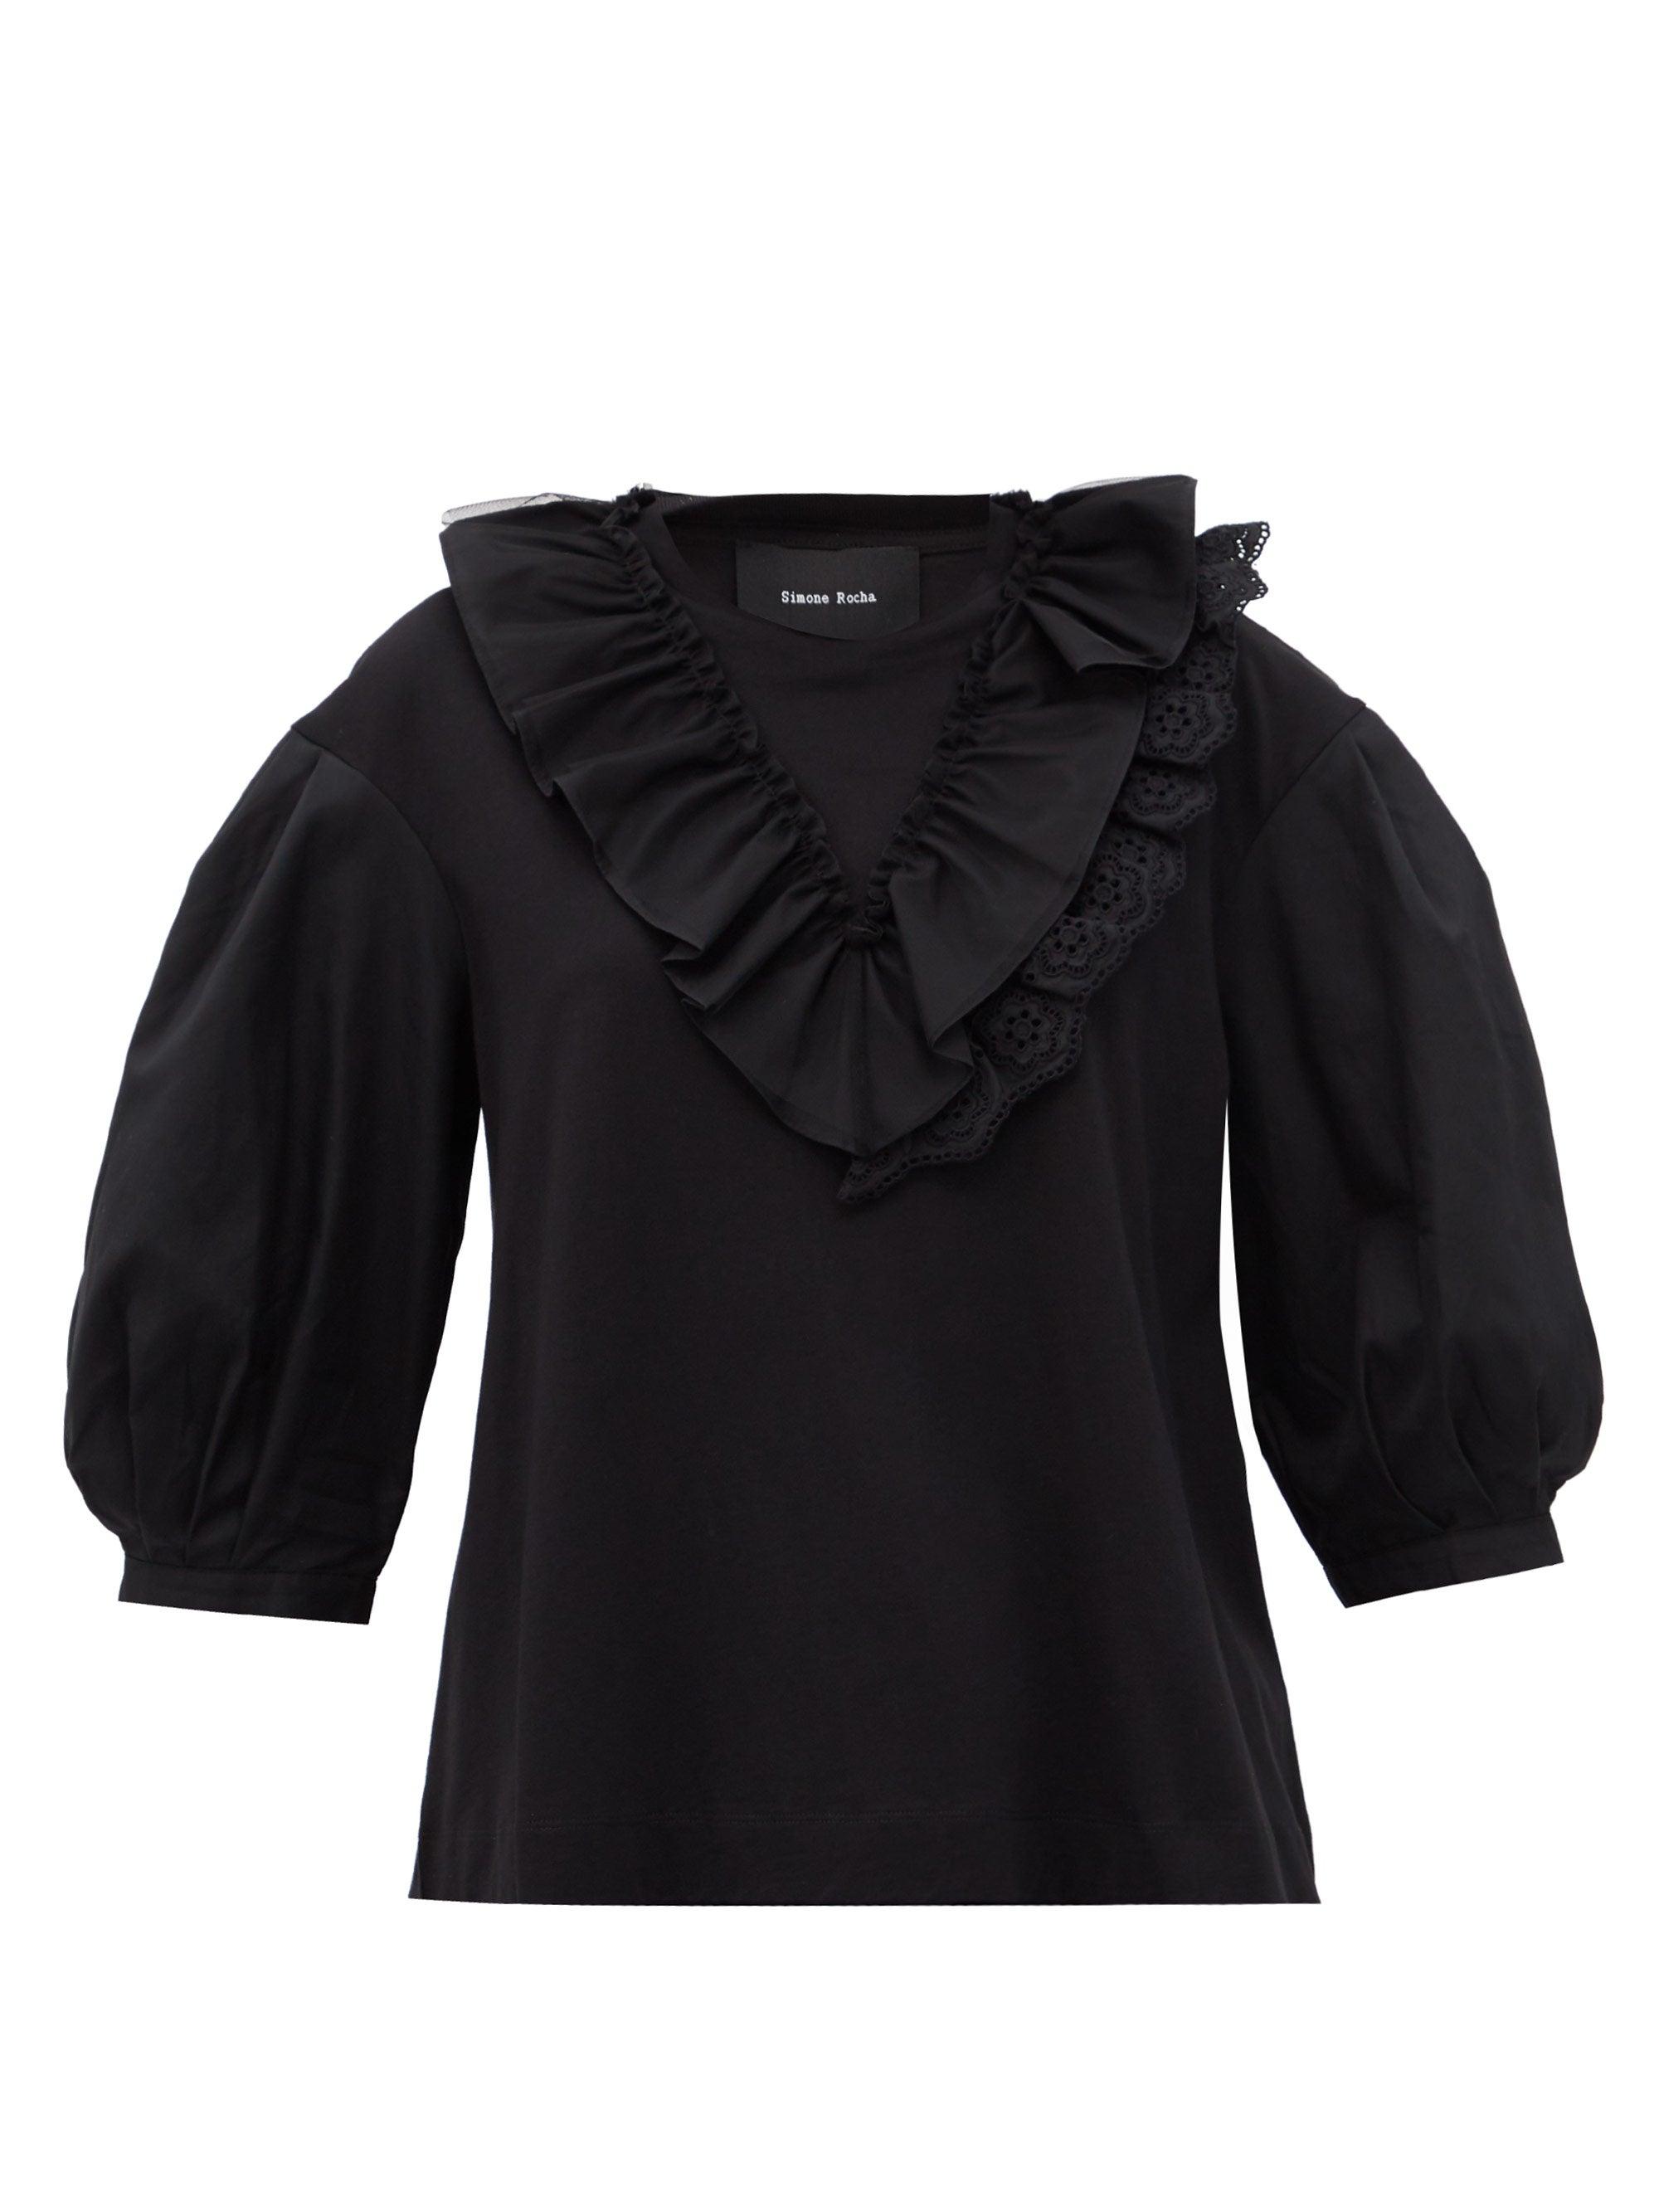 Simone Rocha Ruffled Puff-sleeve Cotton Top in Black - Lyst